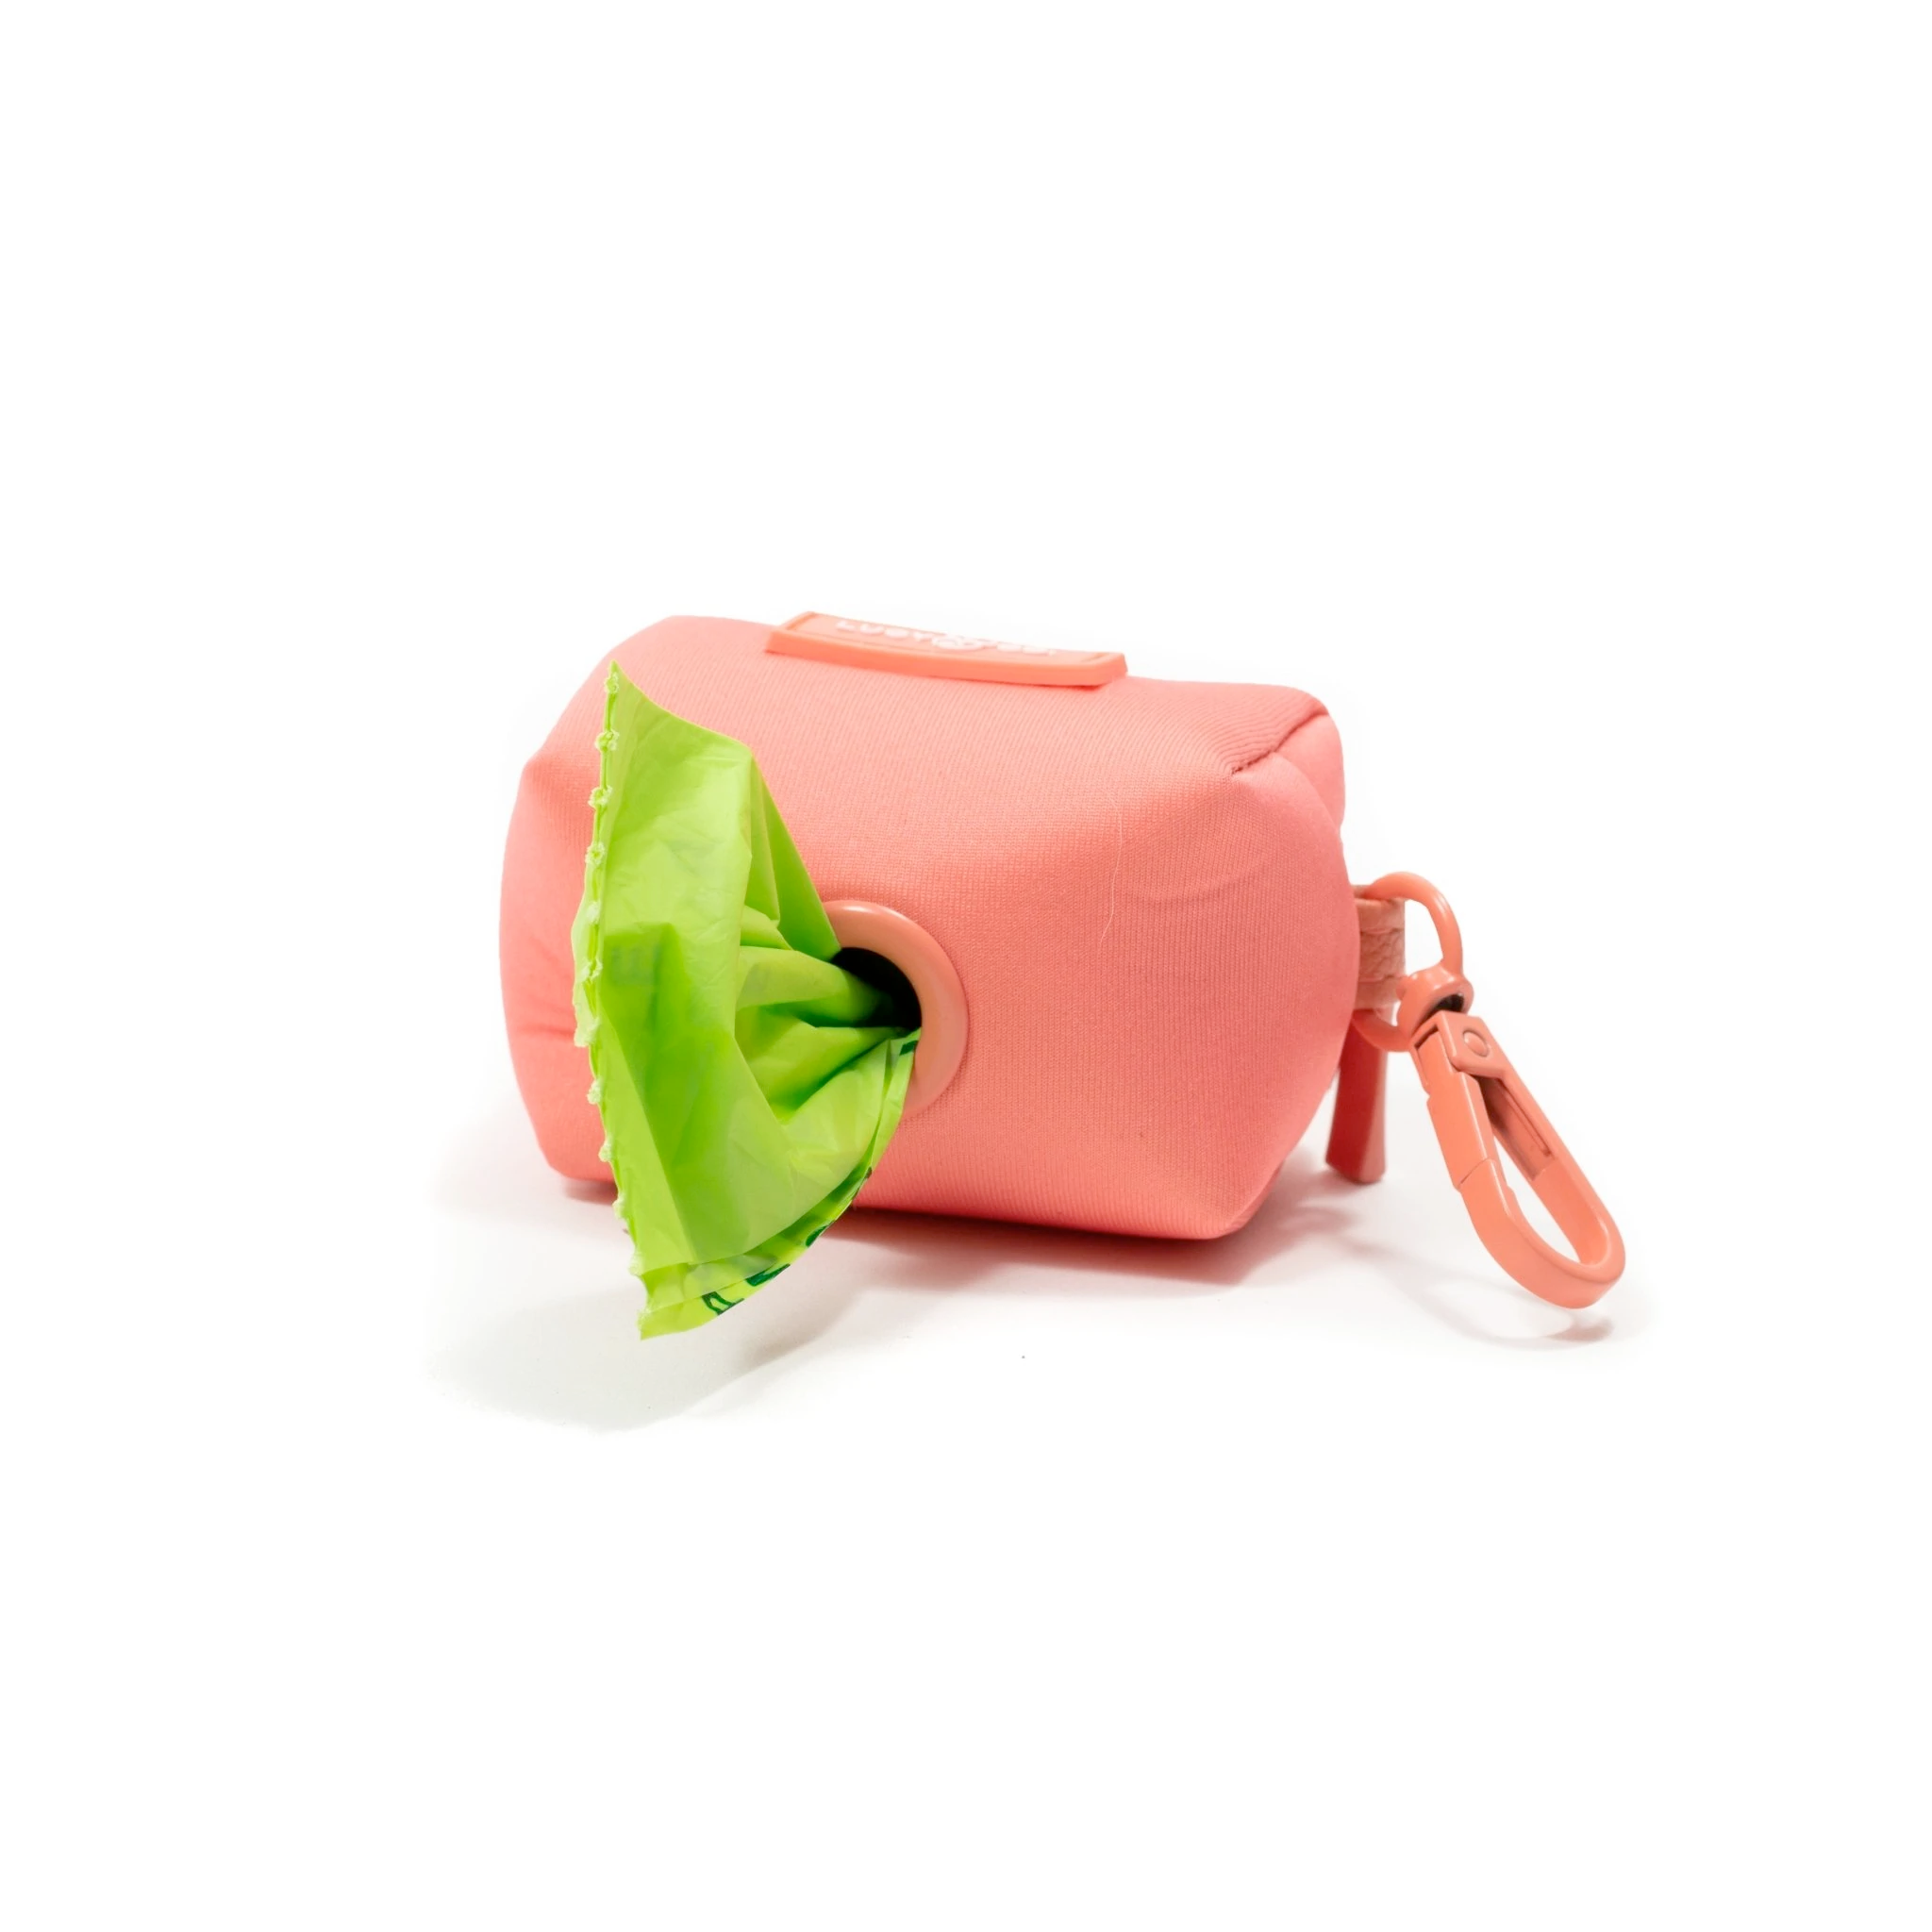 Lucy&Co Everyday Dog Poop Bag Holder: Coral